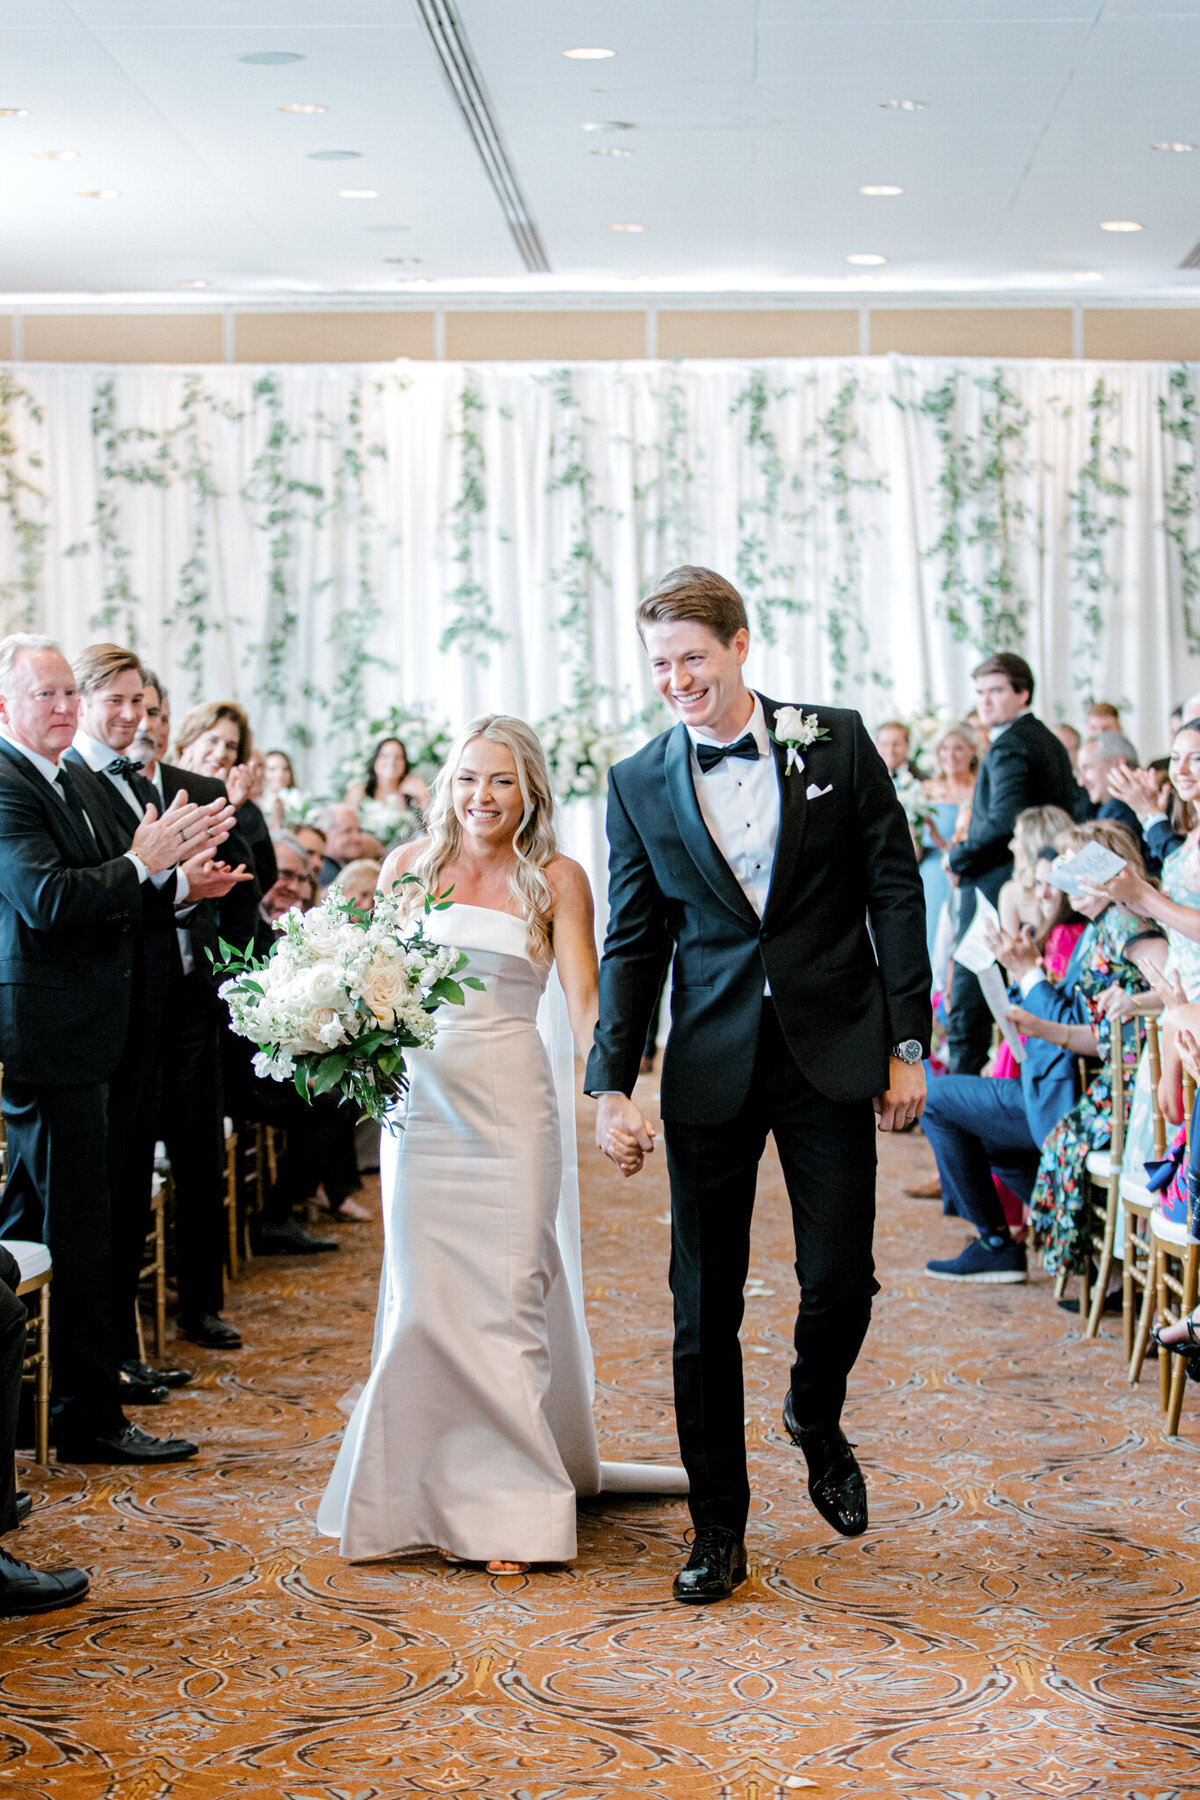 Madison & Michael's Wedding at Union Station | Dallas Wedding Photographer | Sami Kathryn Photography-134